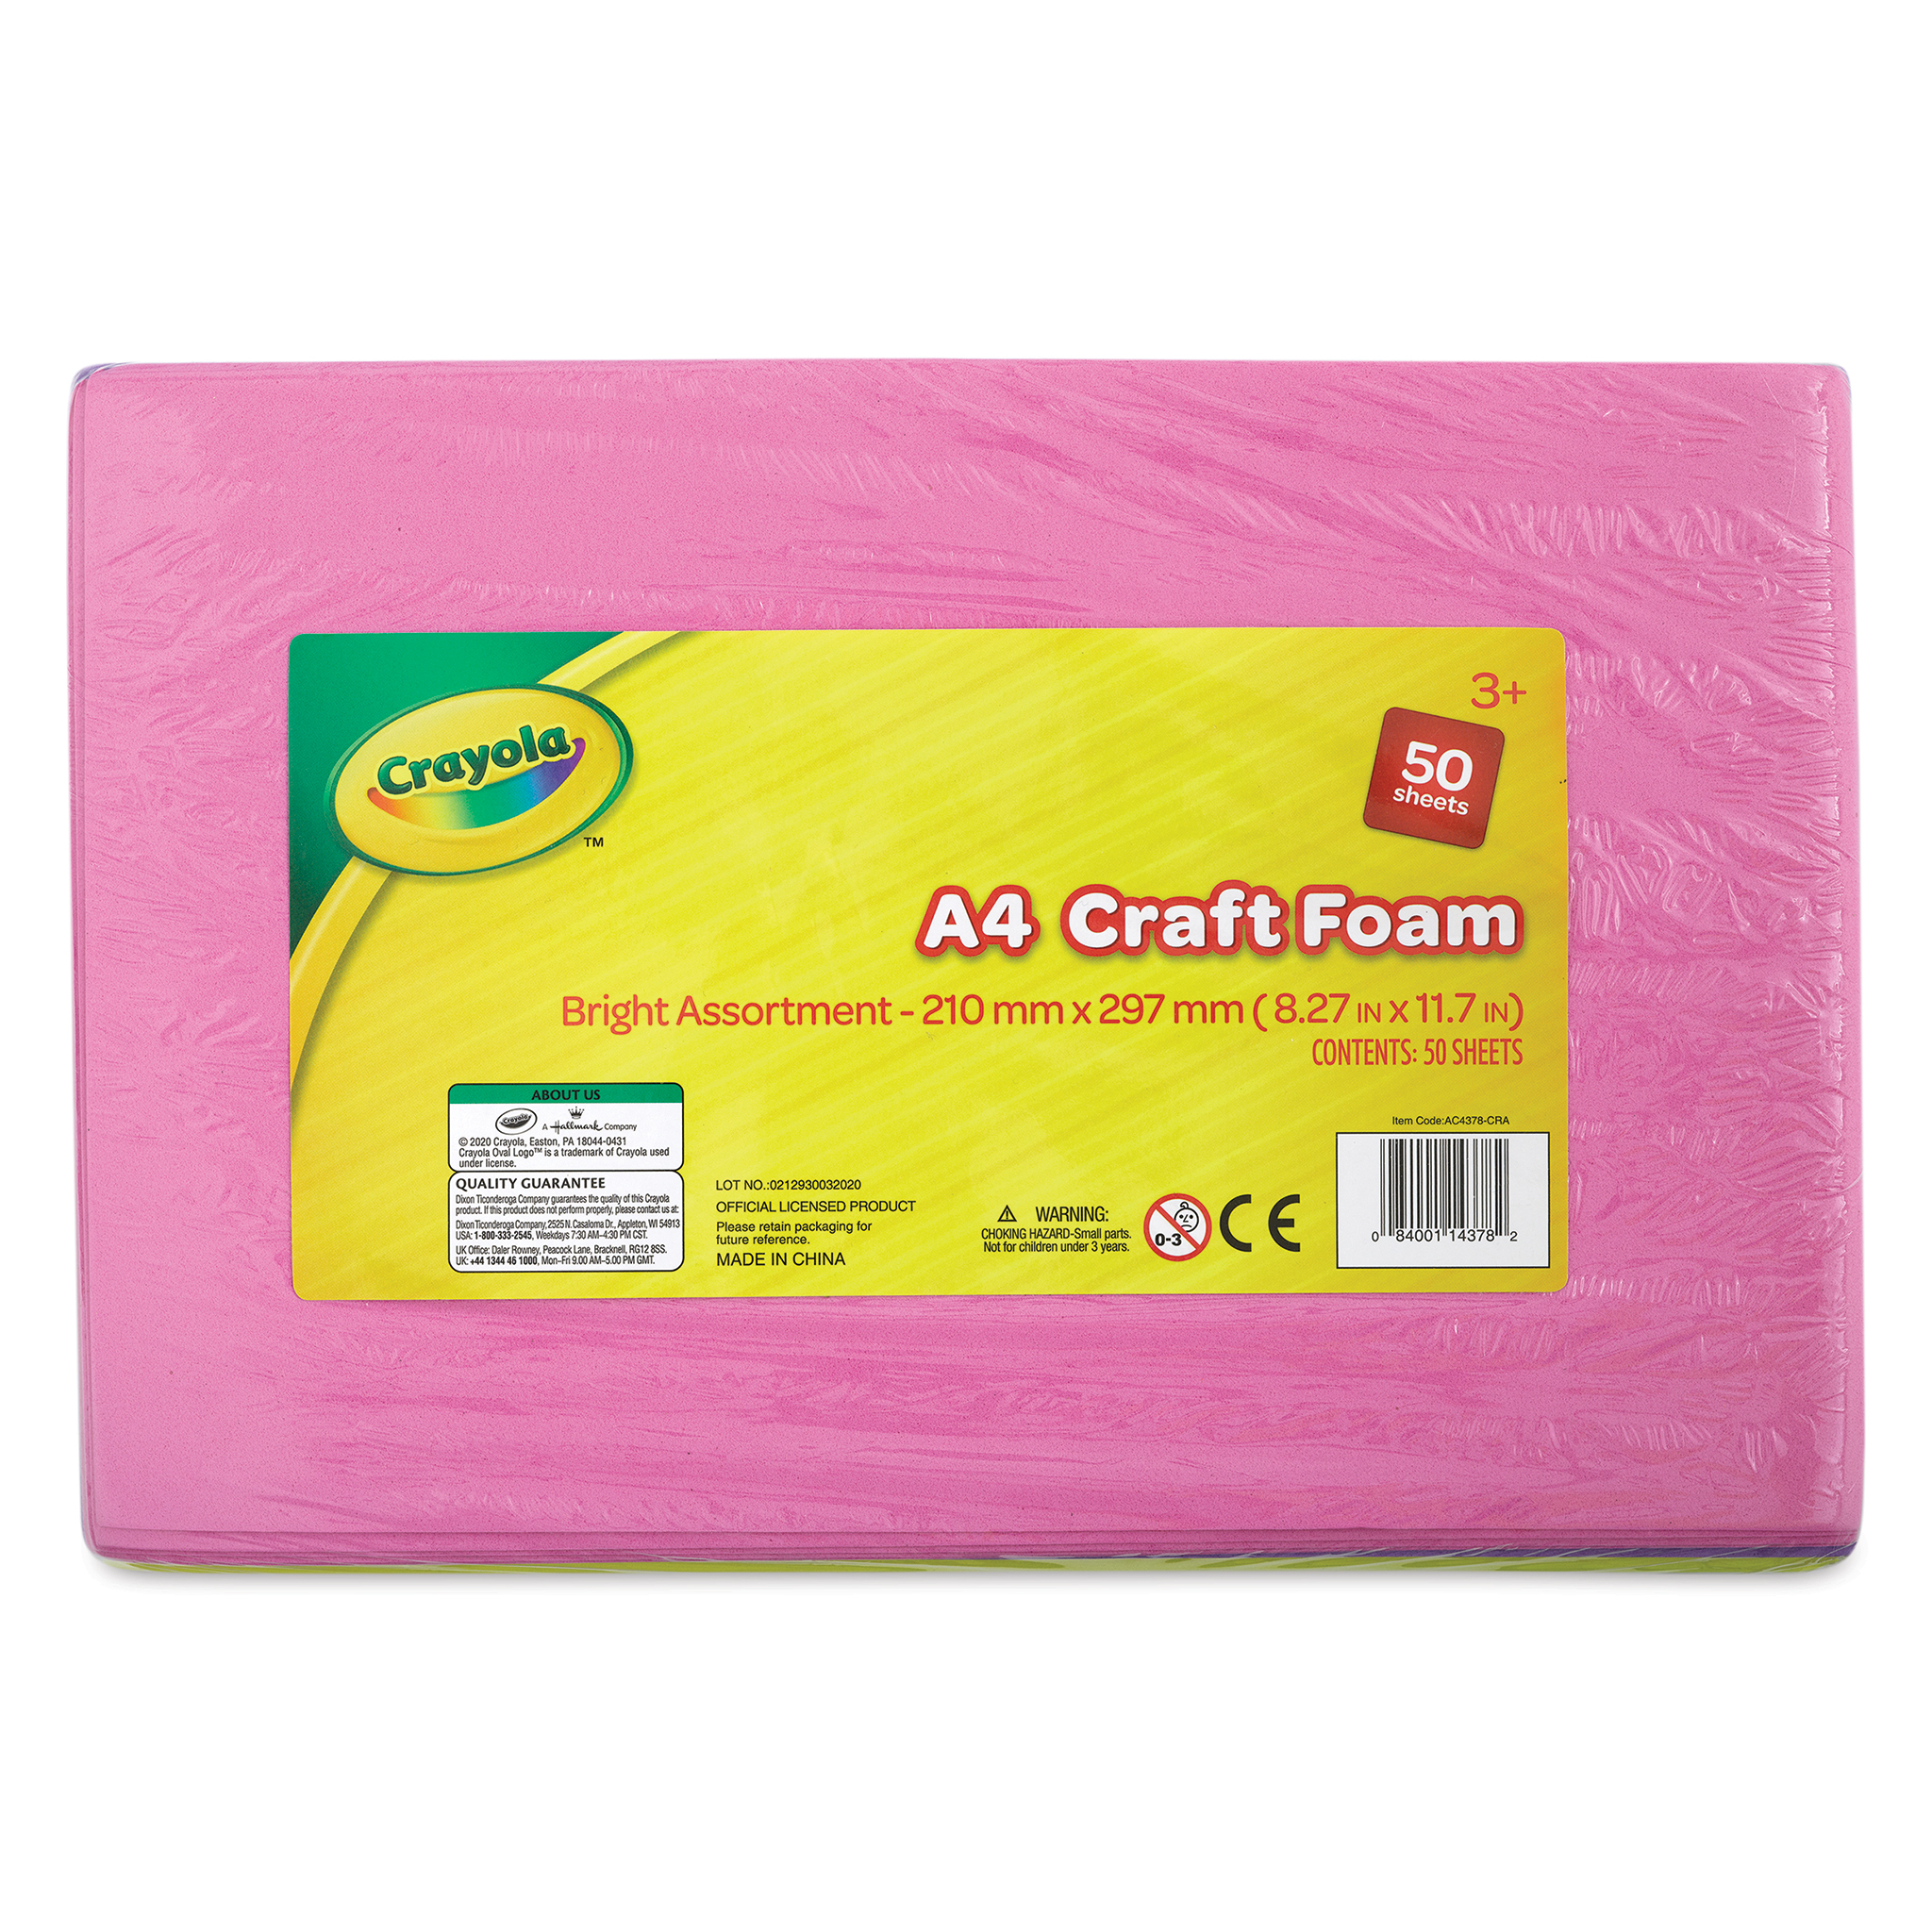 Crayola Craft Foam Sheets